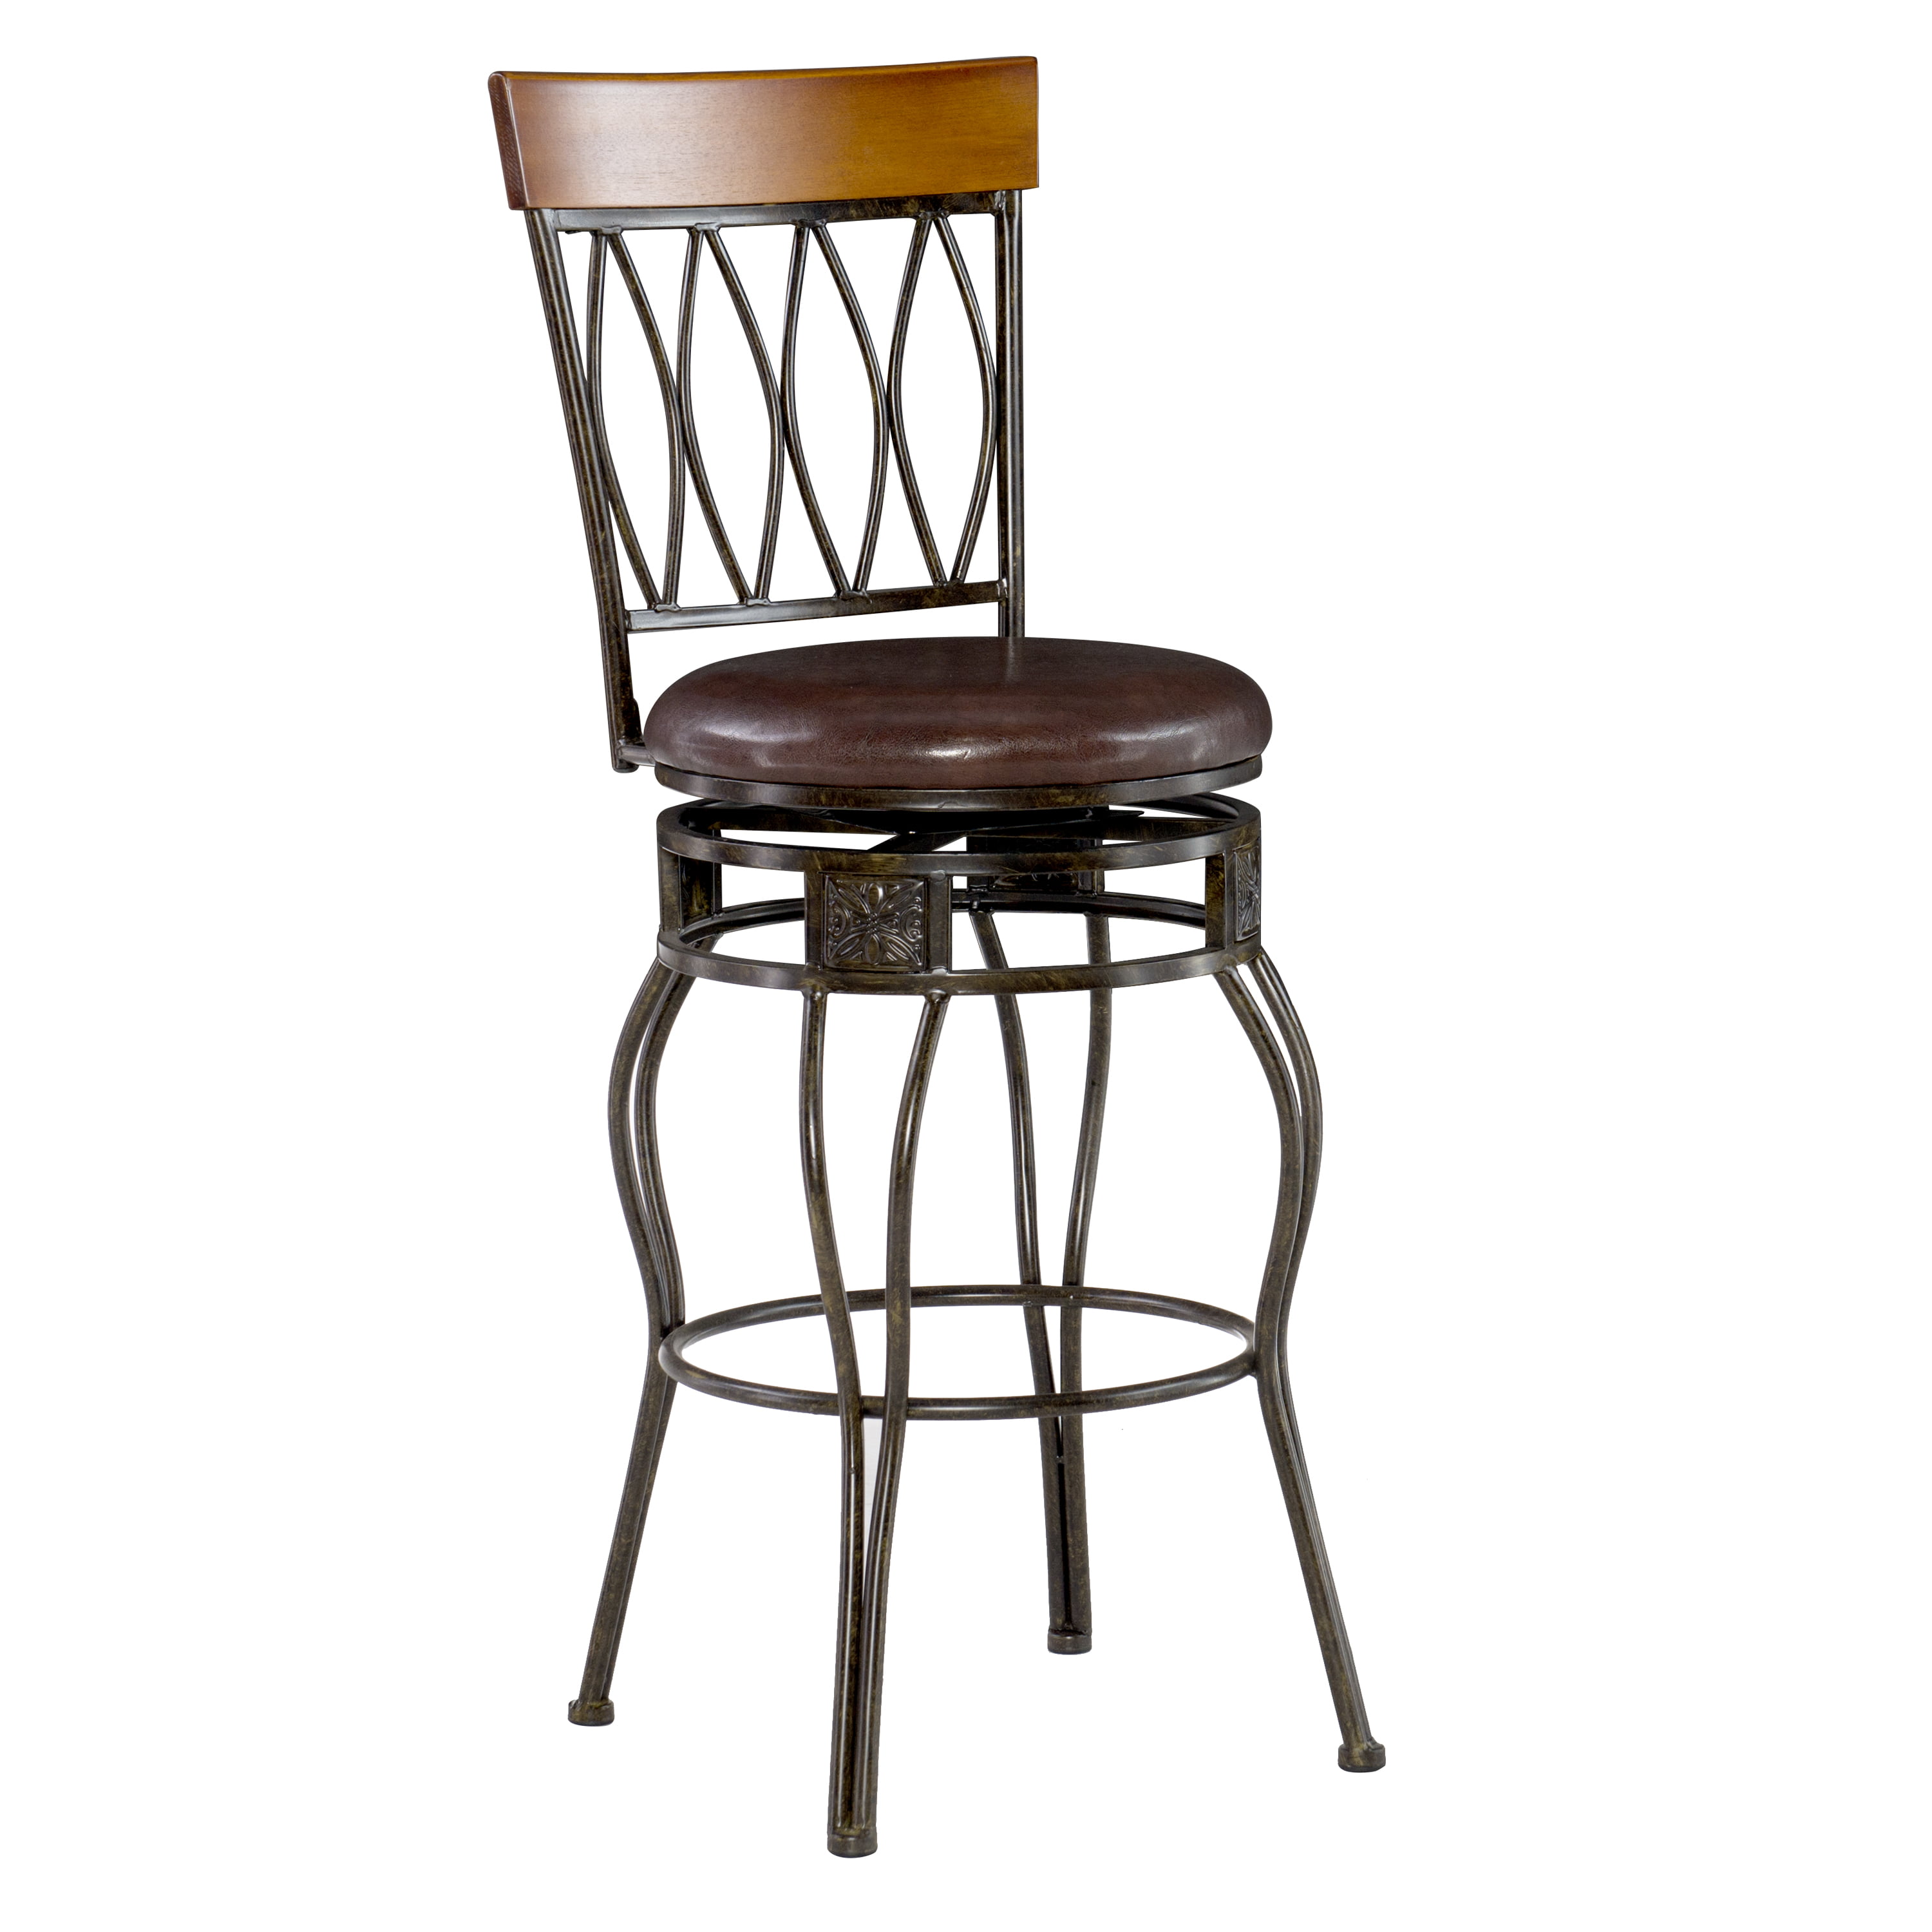 Tall bar stools with backs